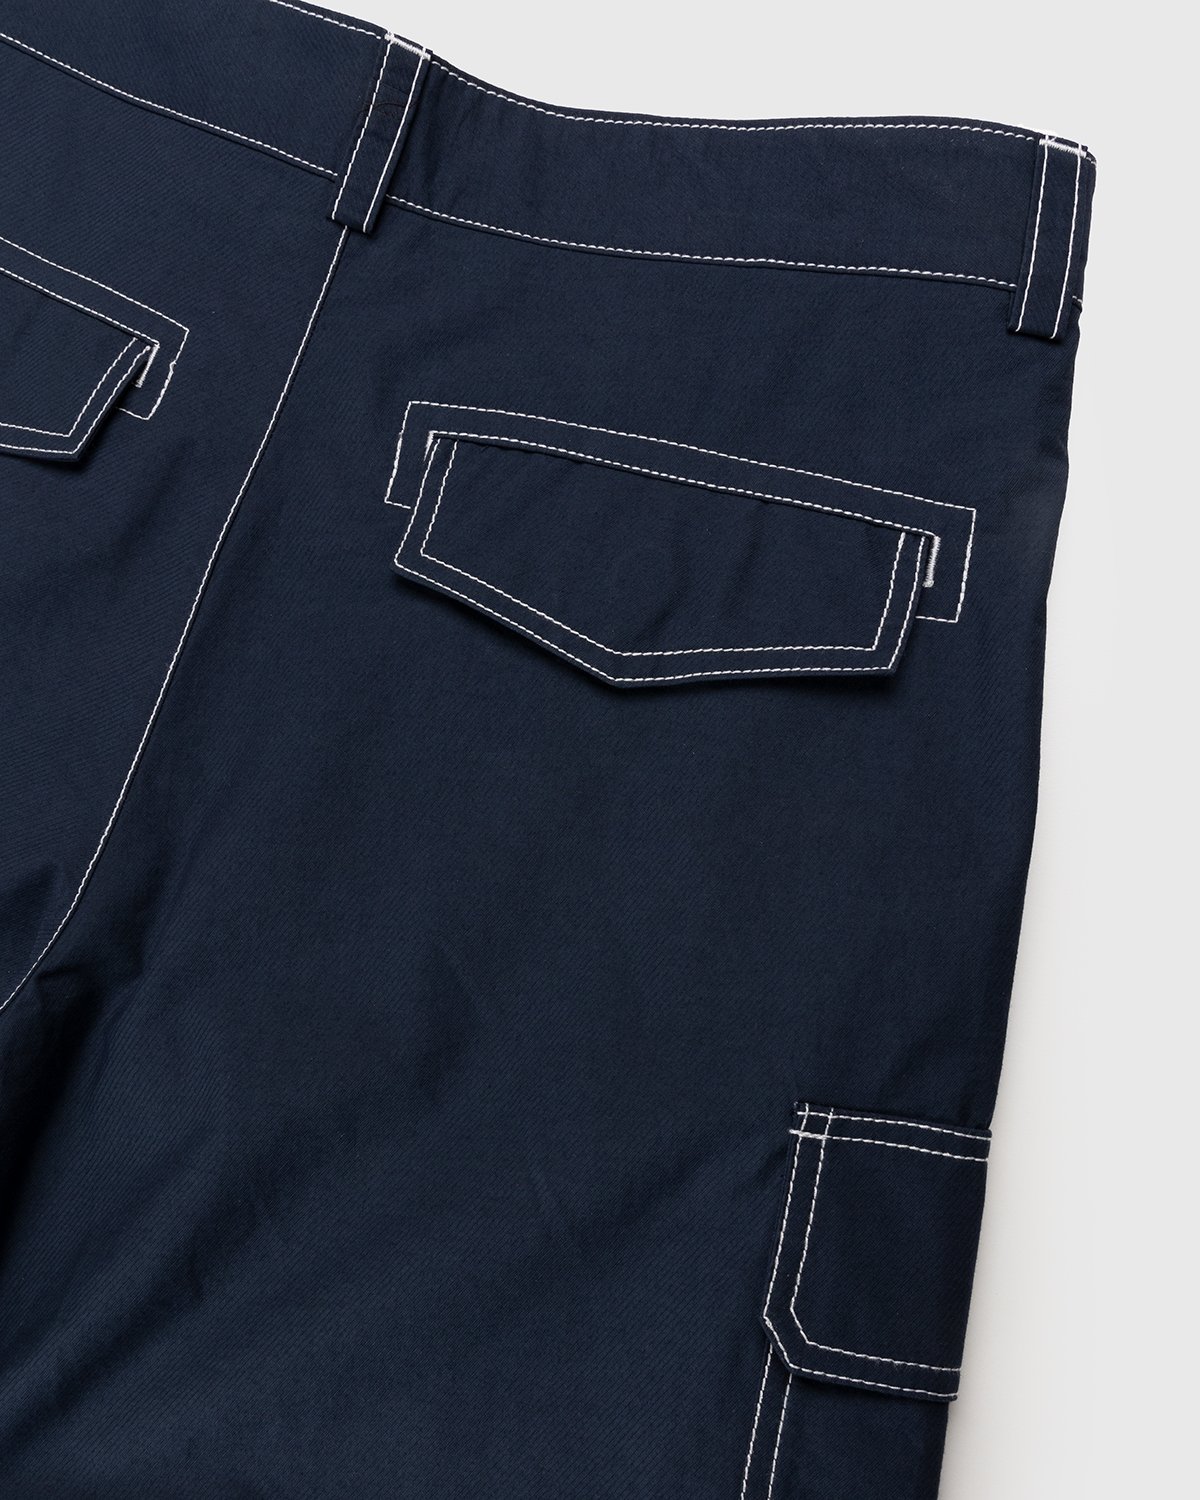 JACQUEMUS - Le Pantalon Peche Navy - Clothing - Blue - Image 5